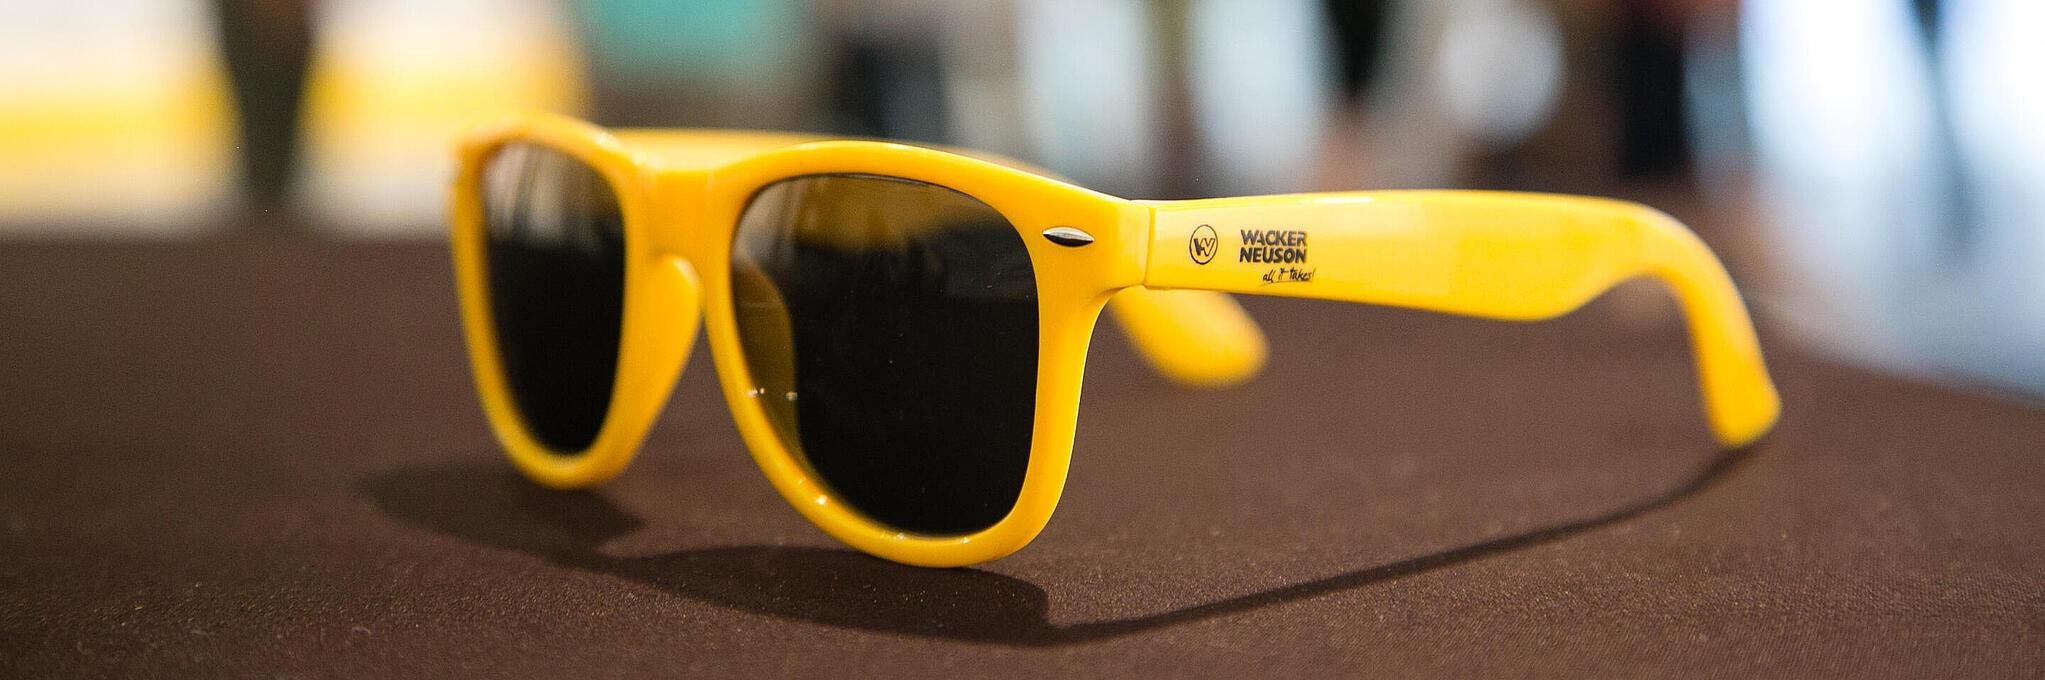 Yellow sunglasses with Wacker Neuson logo.